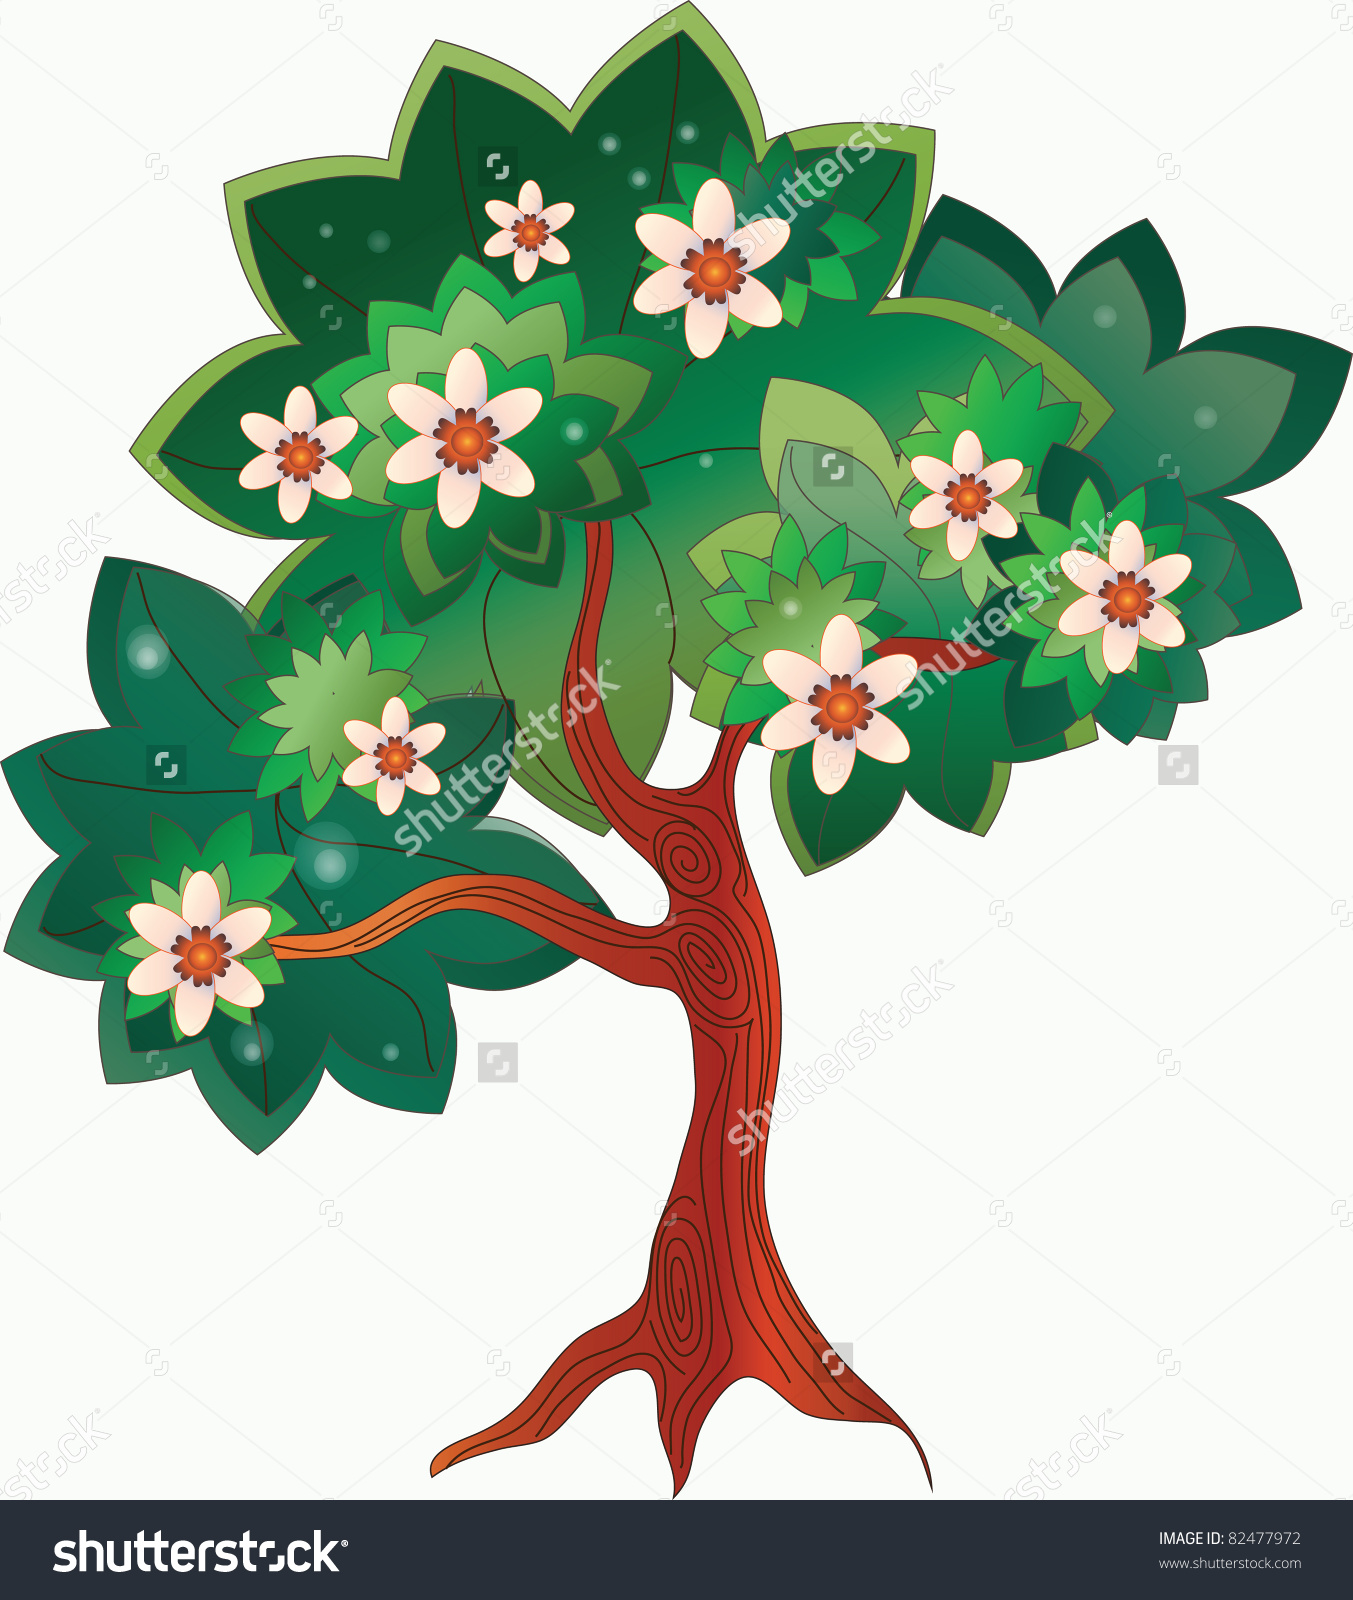 Image Of A Cartoon Tree With A Flourishing Crown Stock Photo.